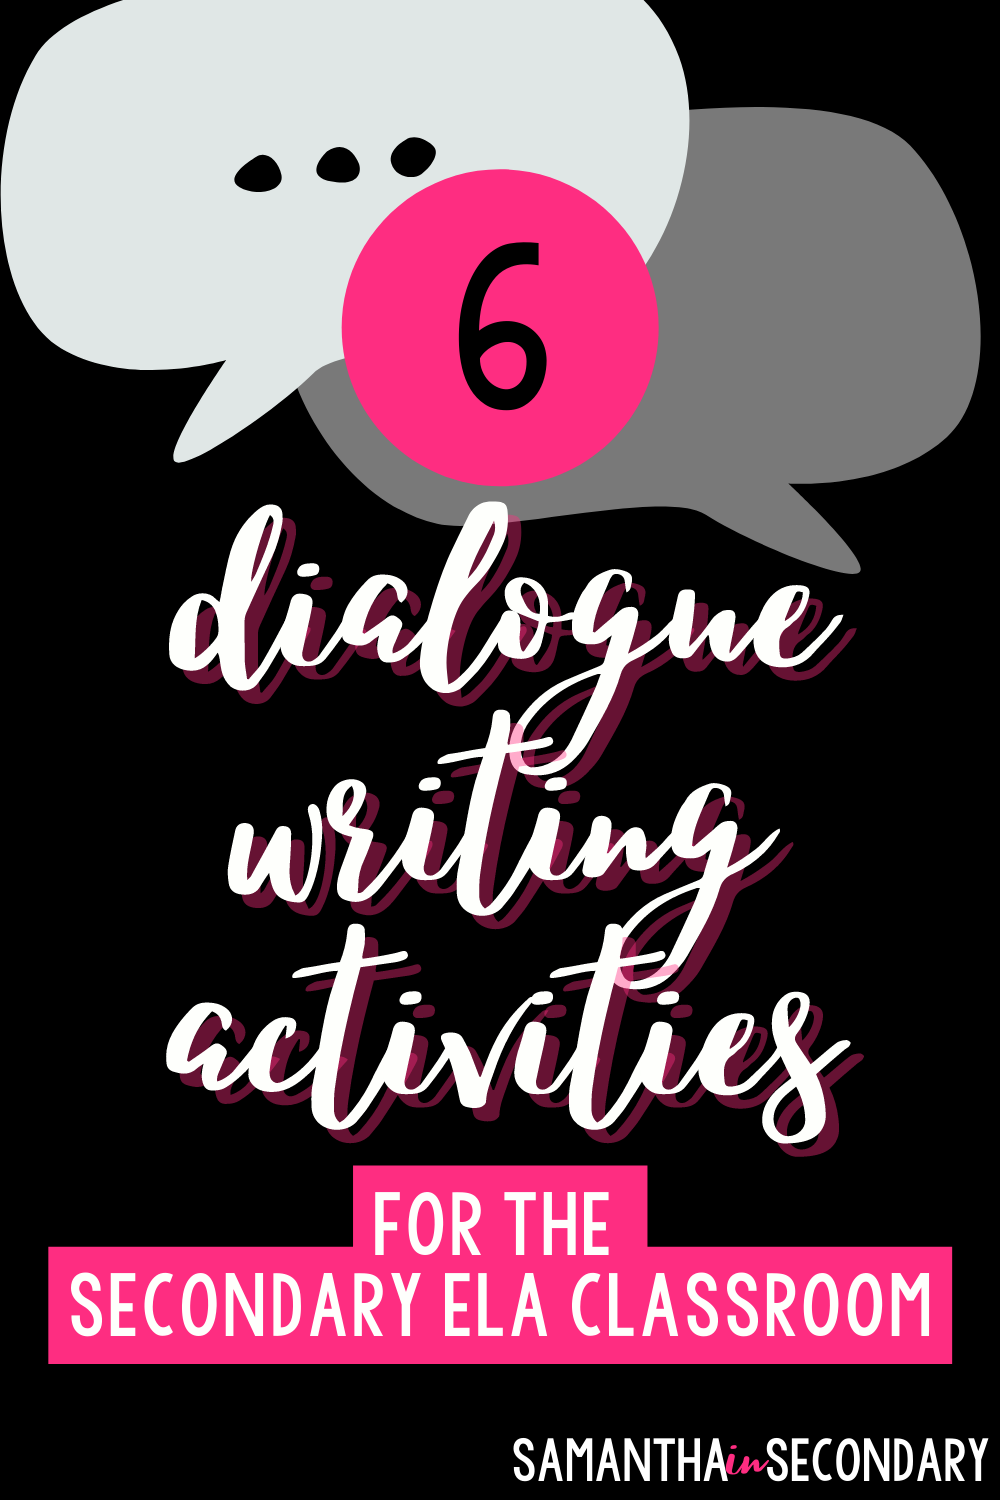 dialogue exercises for creative writing